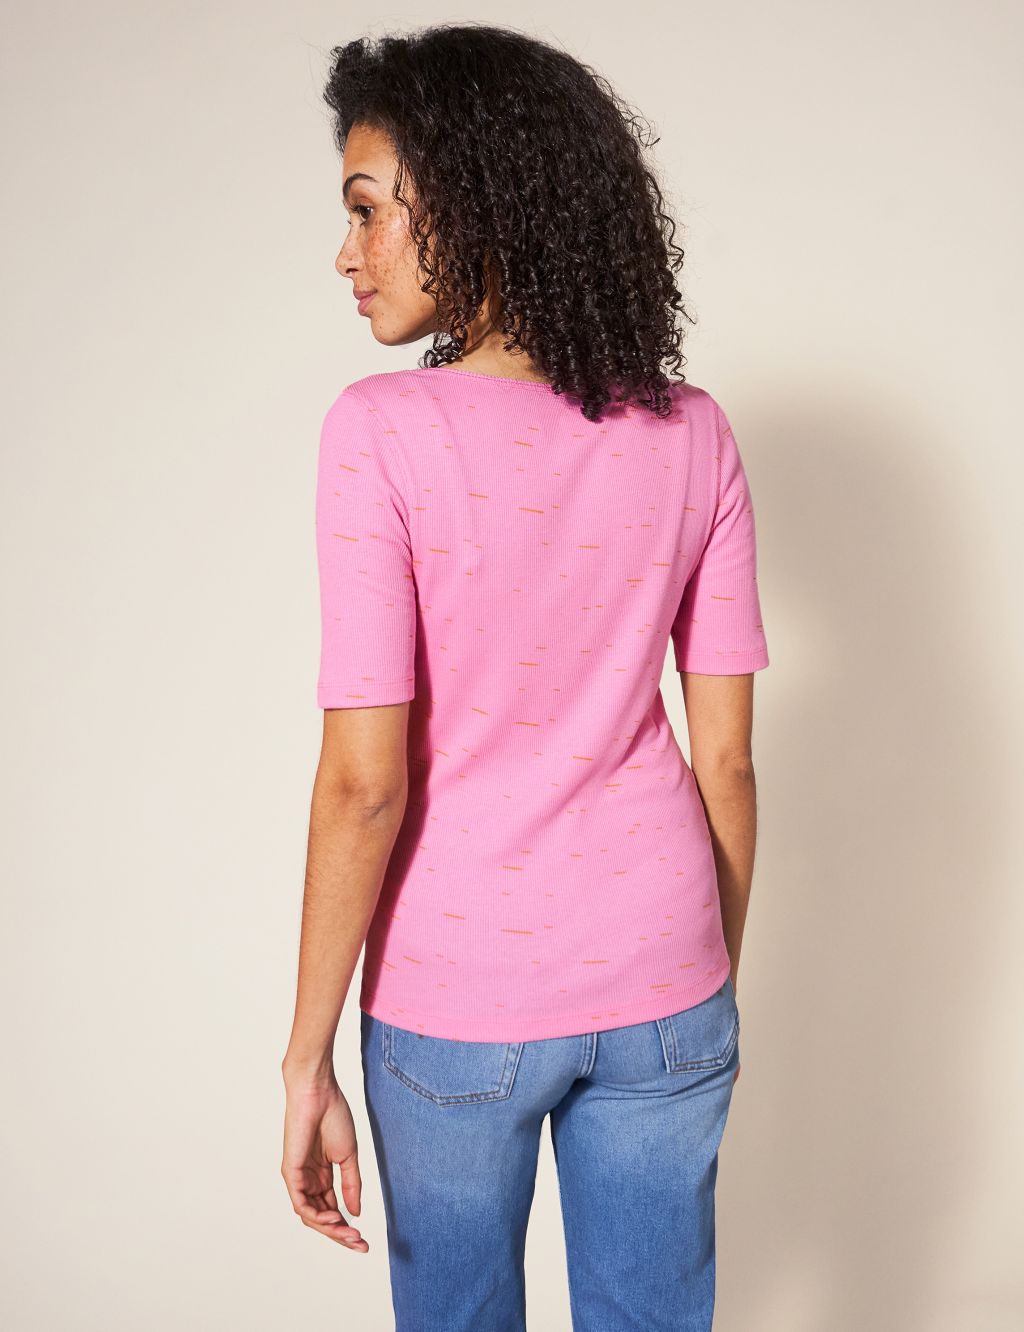 Cotton Modal Blend Printed T-Shirt image 2